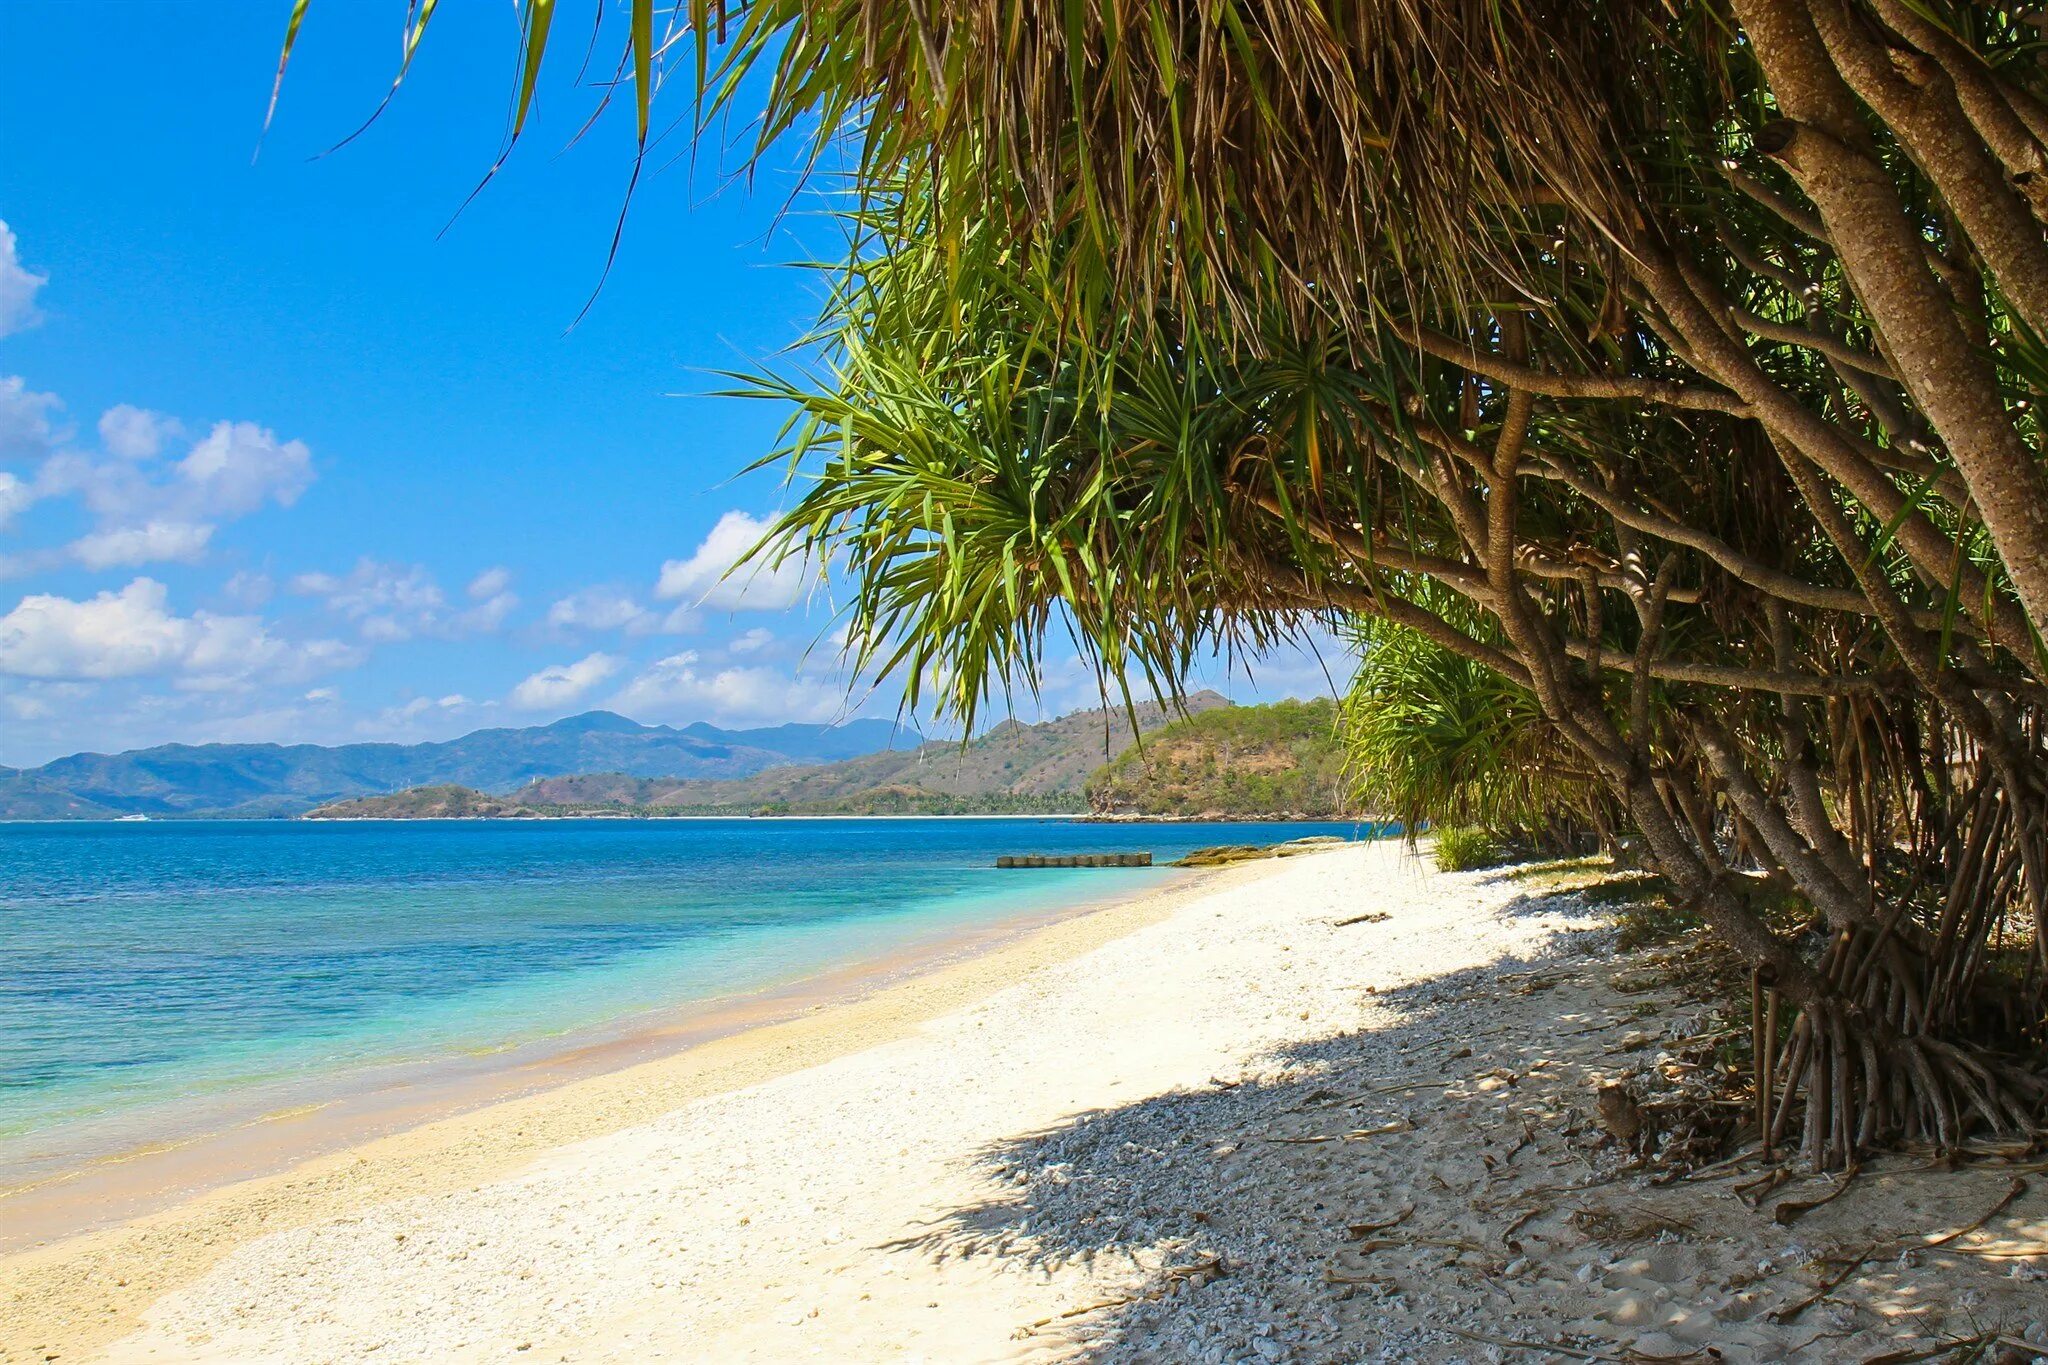 Остров ломбок. Остров Сумбава Индонезия. Пляж Гили Бали. Гили Траванган Индонезия. Остров остров Ломбок.